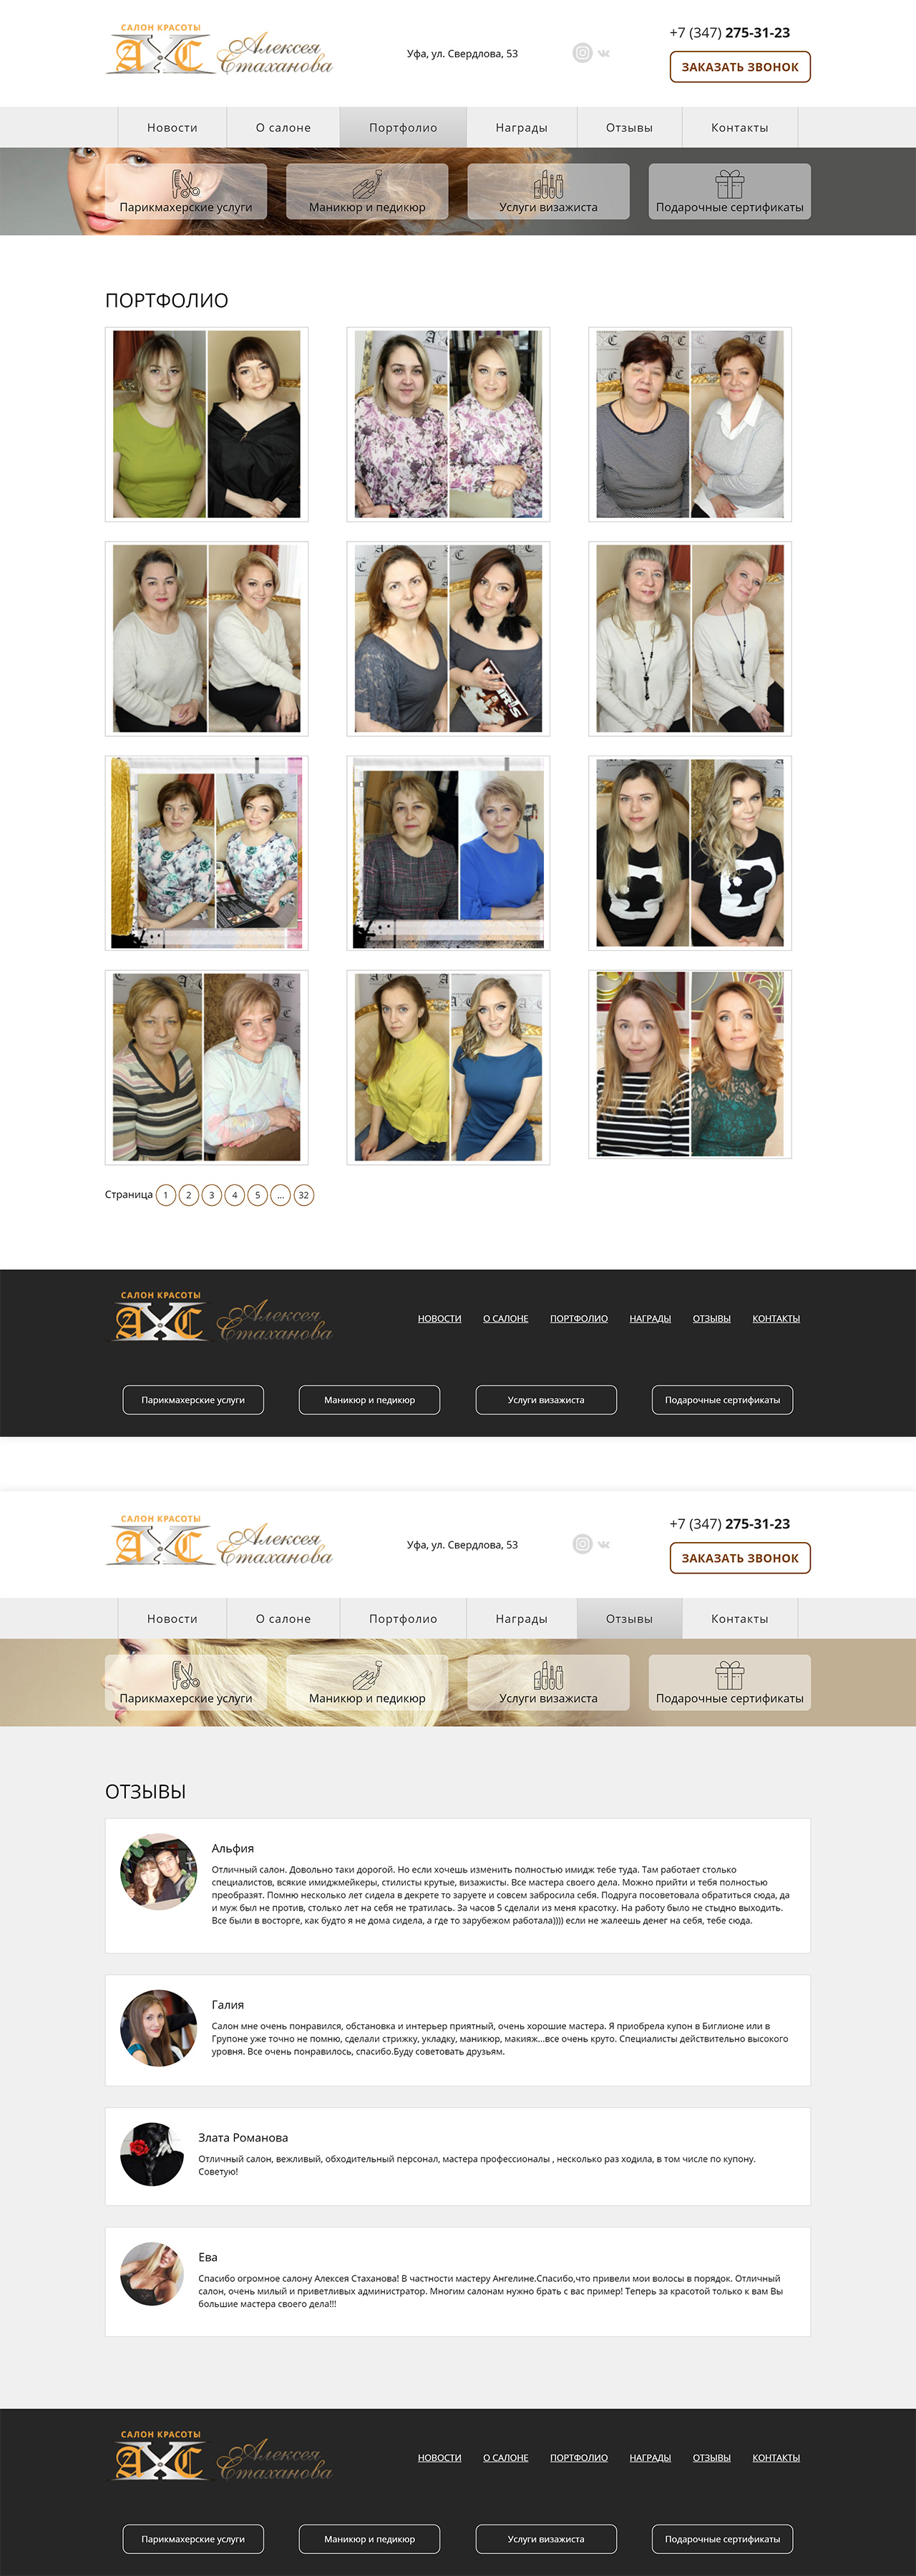 Создание корпоративного сайта Салон красоты Алексея Стаханова